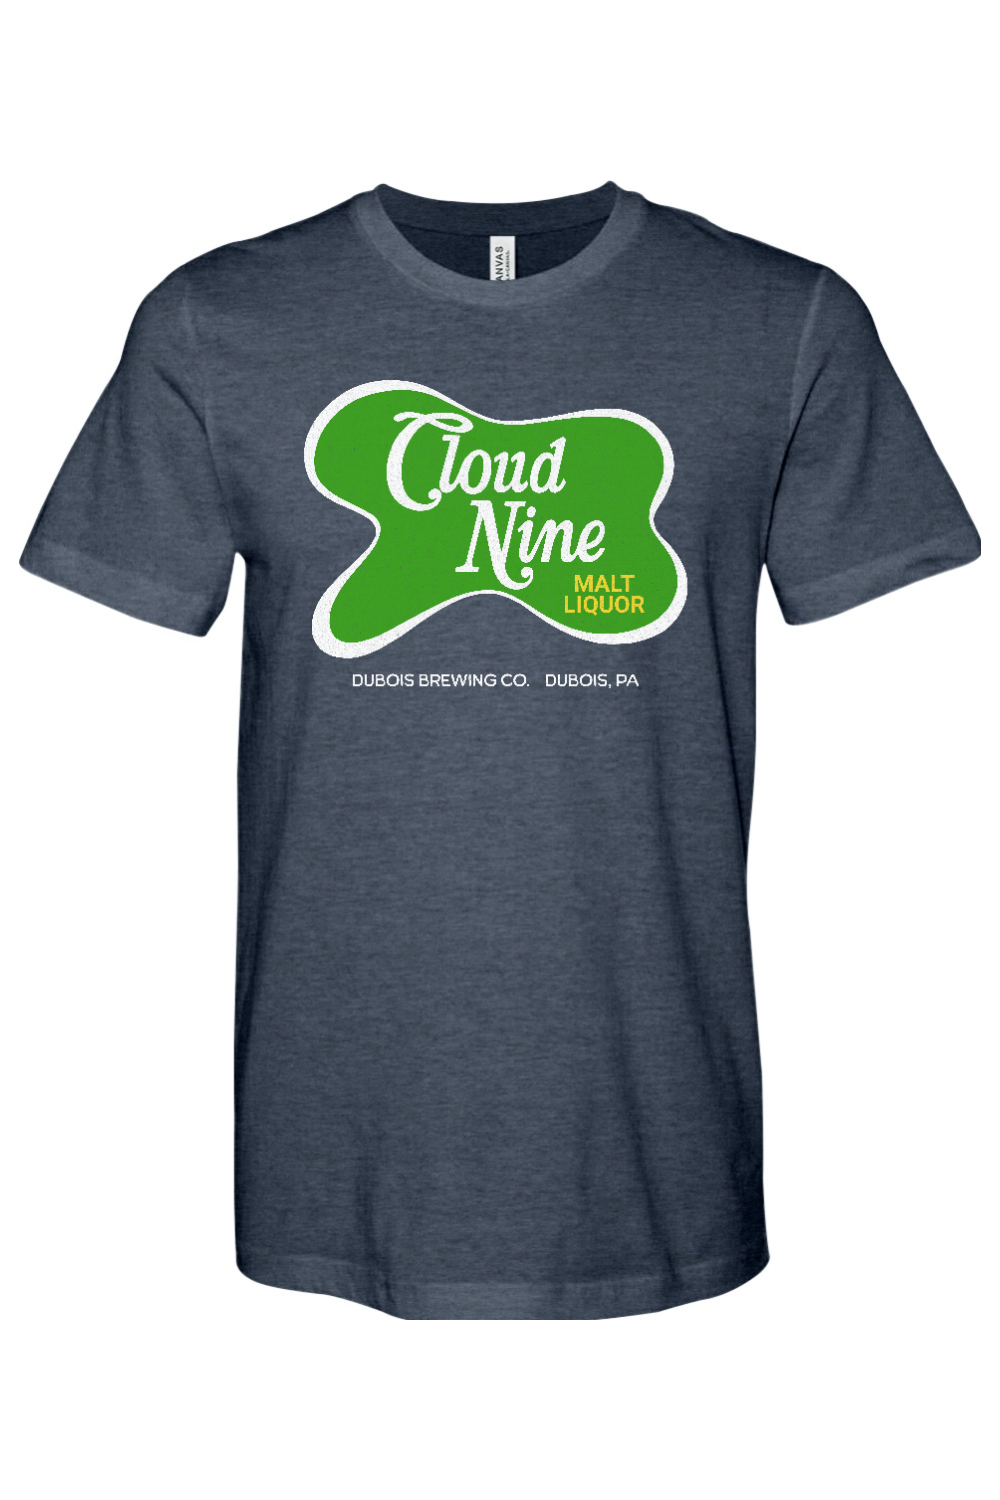 Cloud Nine Malt Liquor - DuBois, PA - Yinzylvania